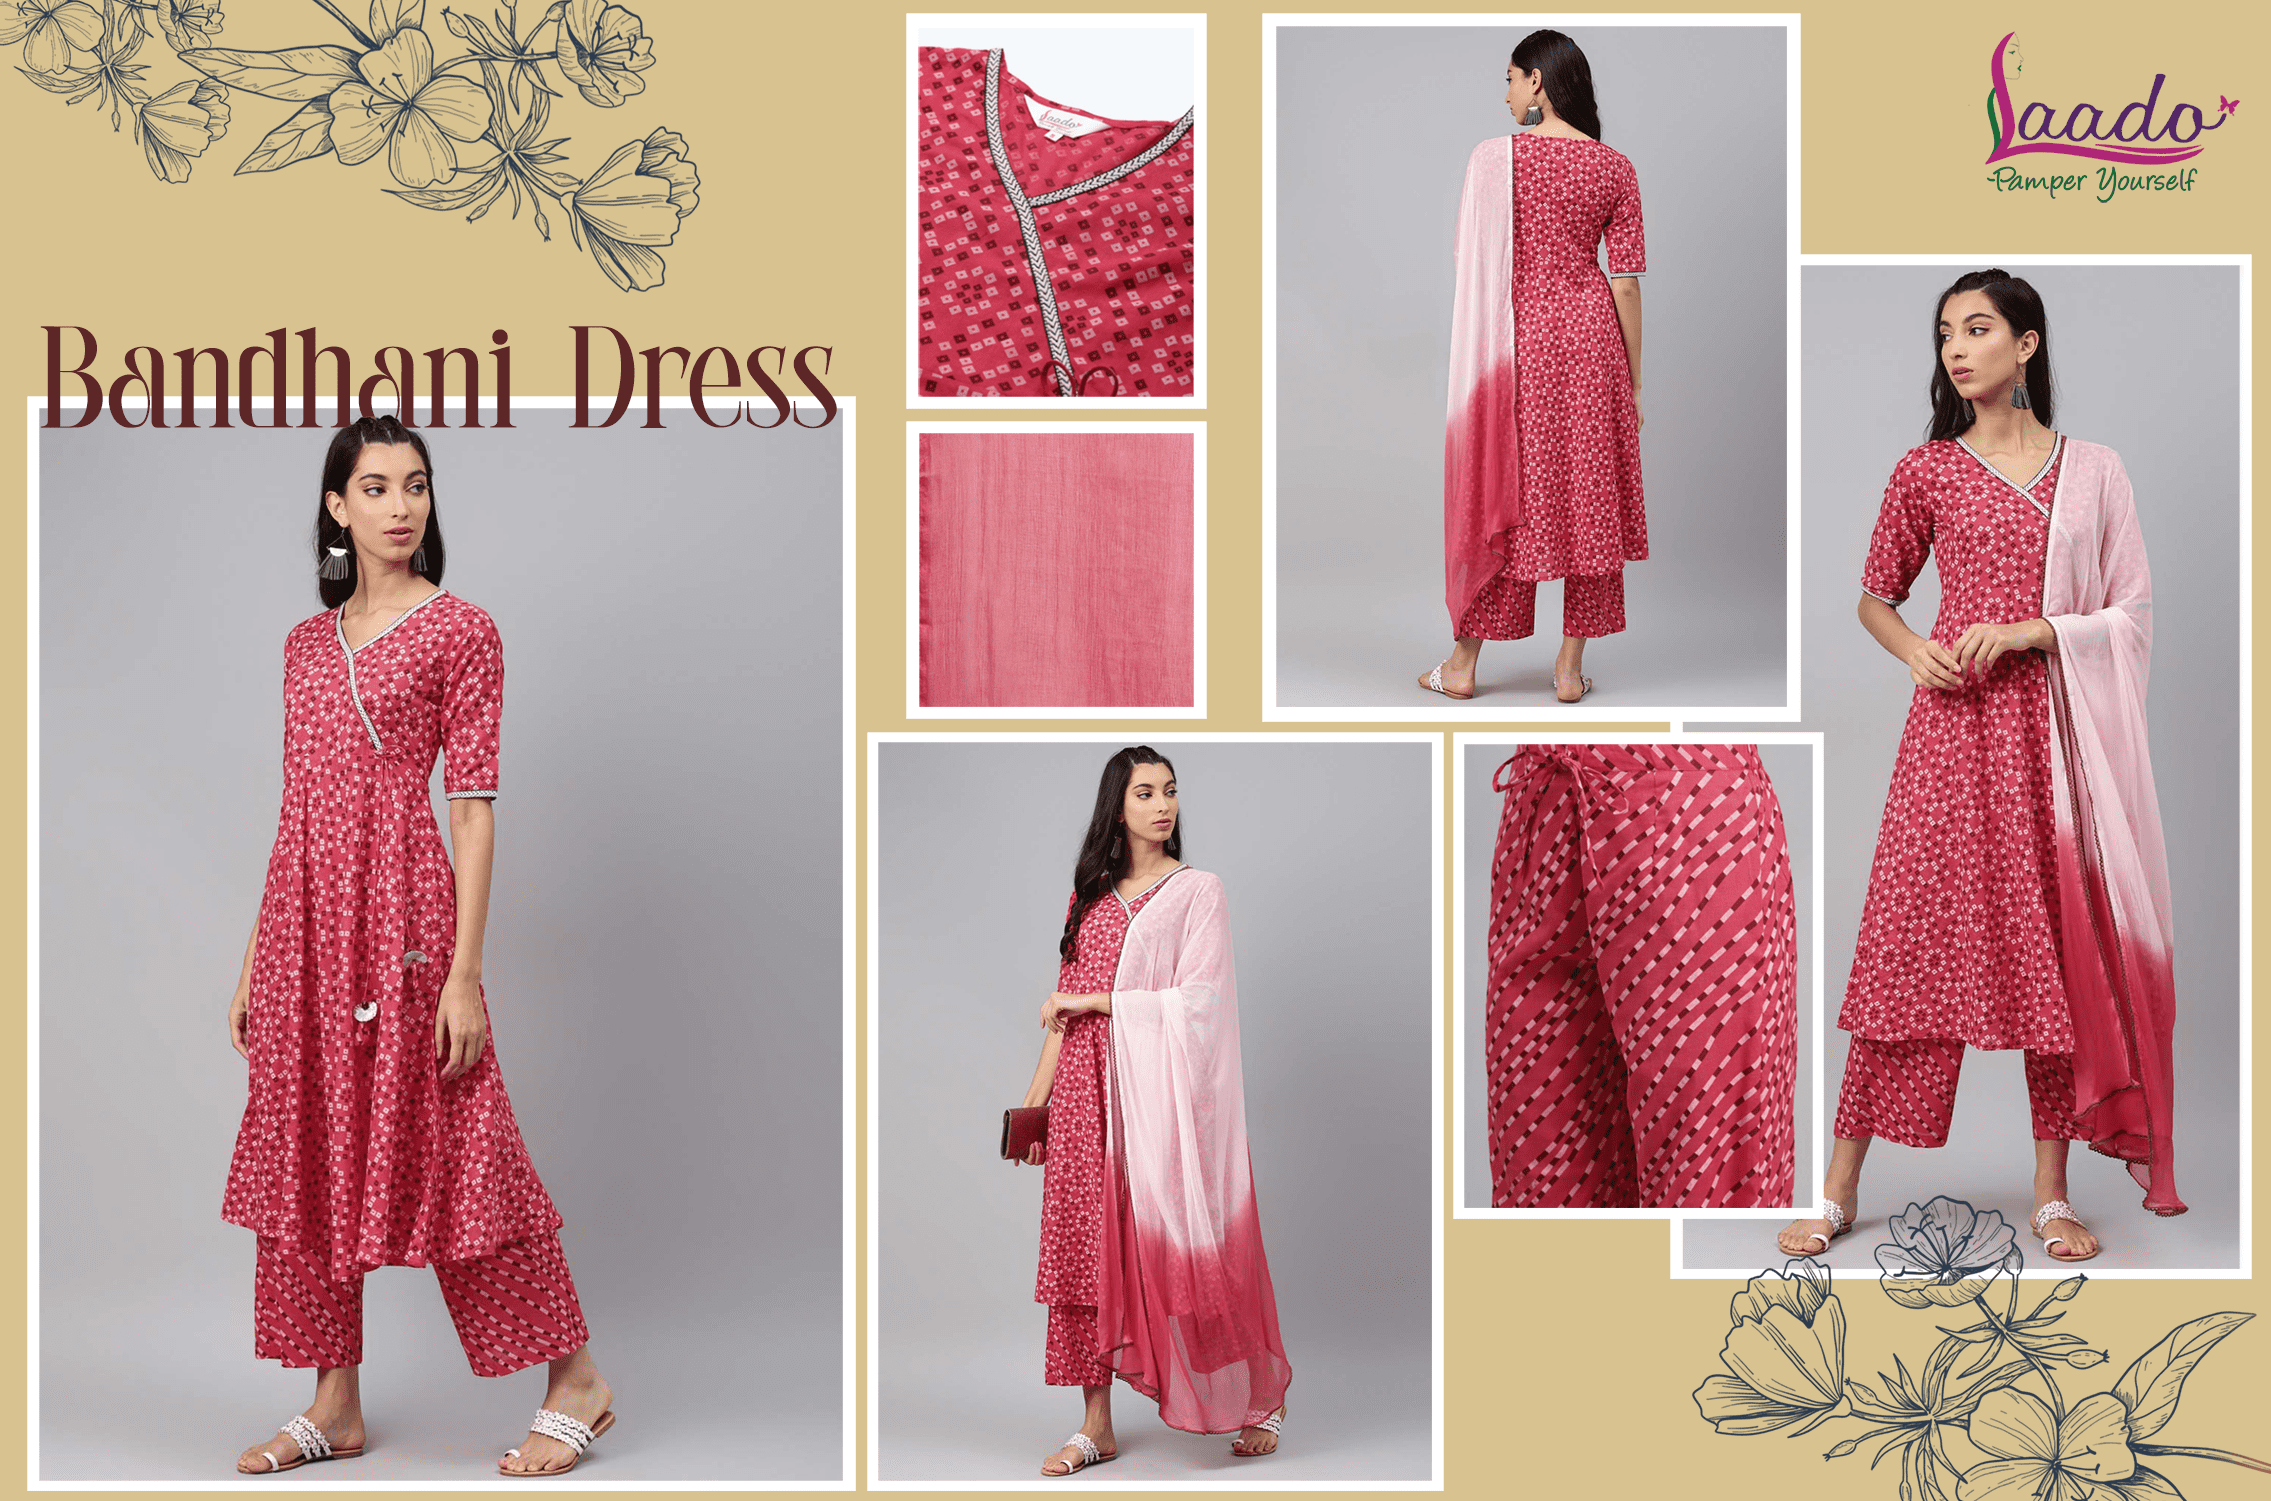 Bandhani Dress Indian traditional dress for women